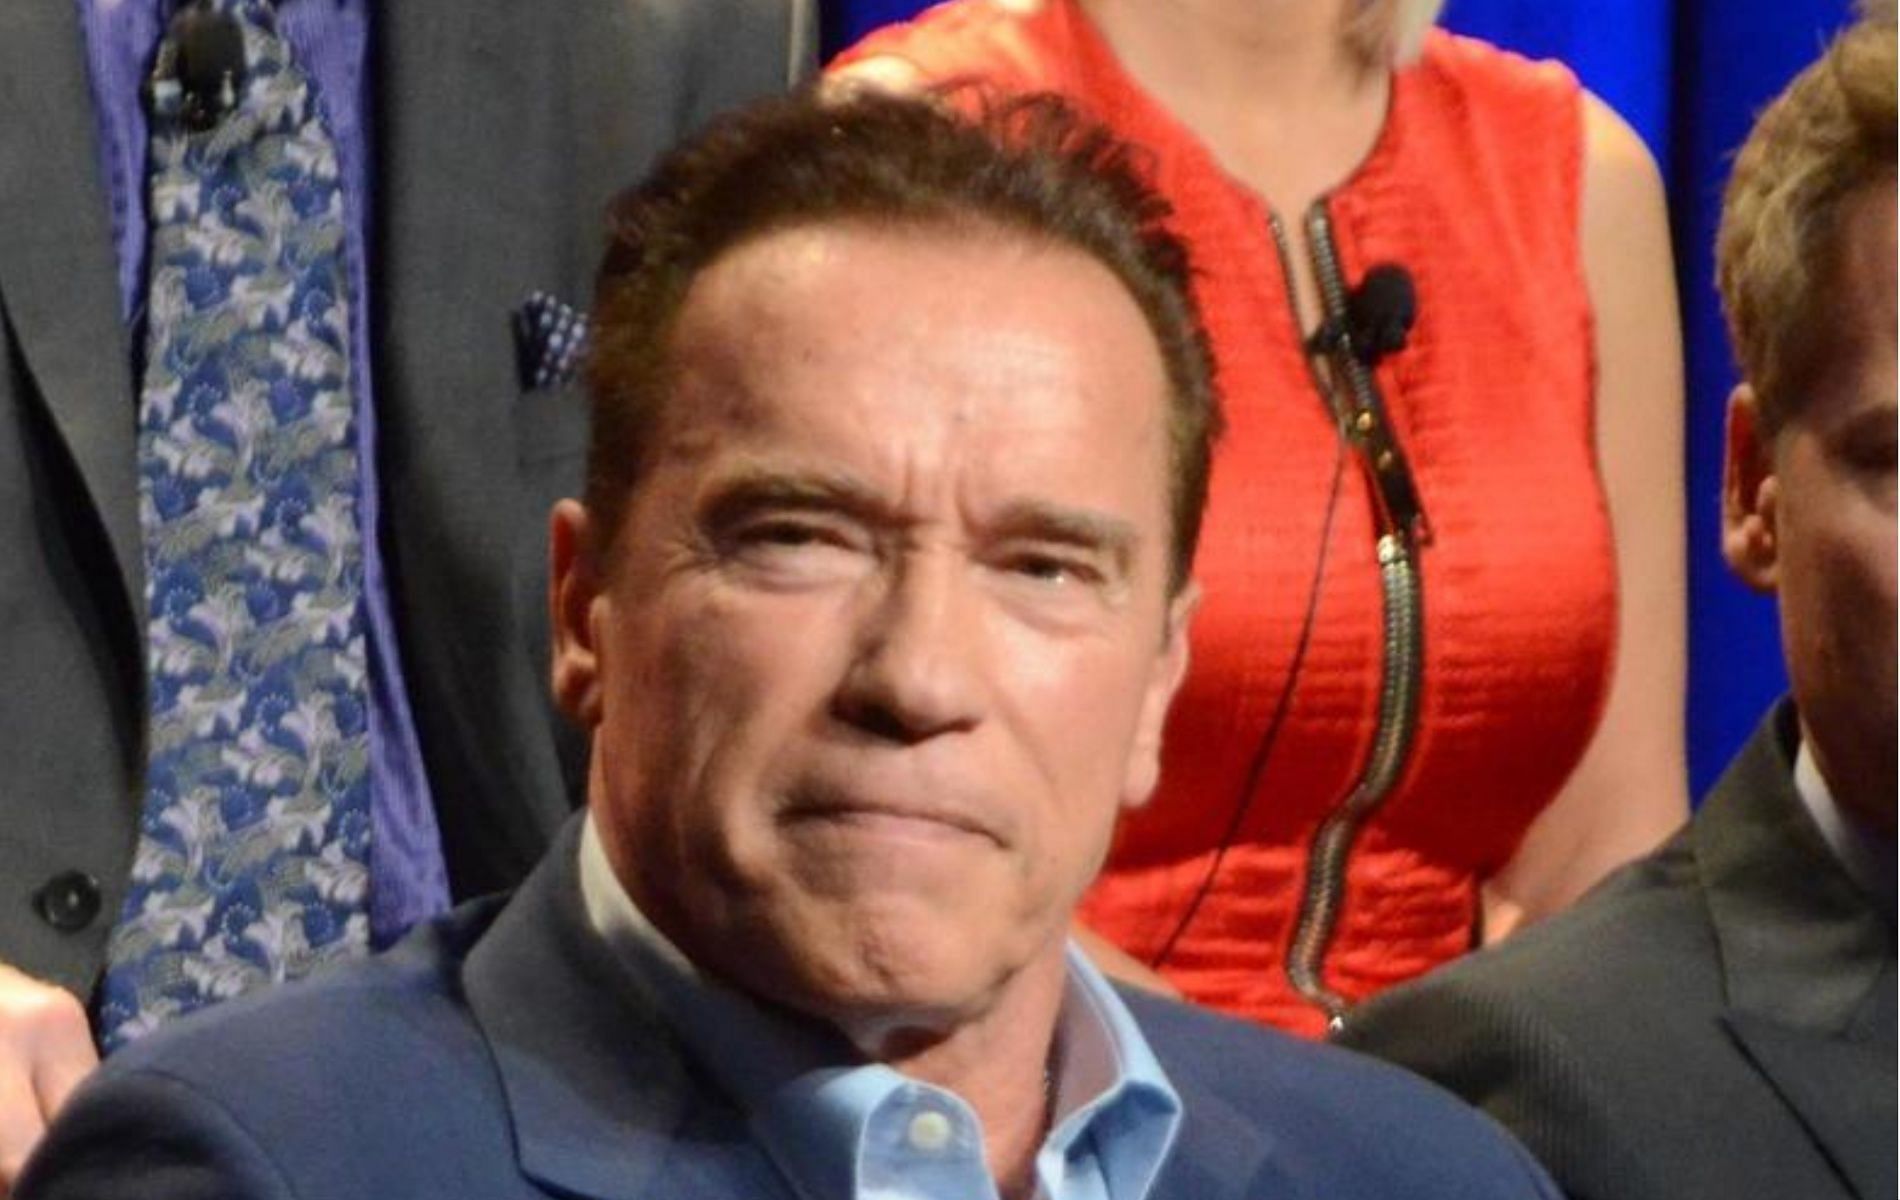 Arnold Schwarzenegger got an open heart surgery back in 2018. (Image via Vecteezy)